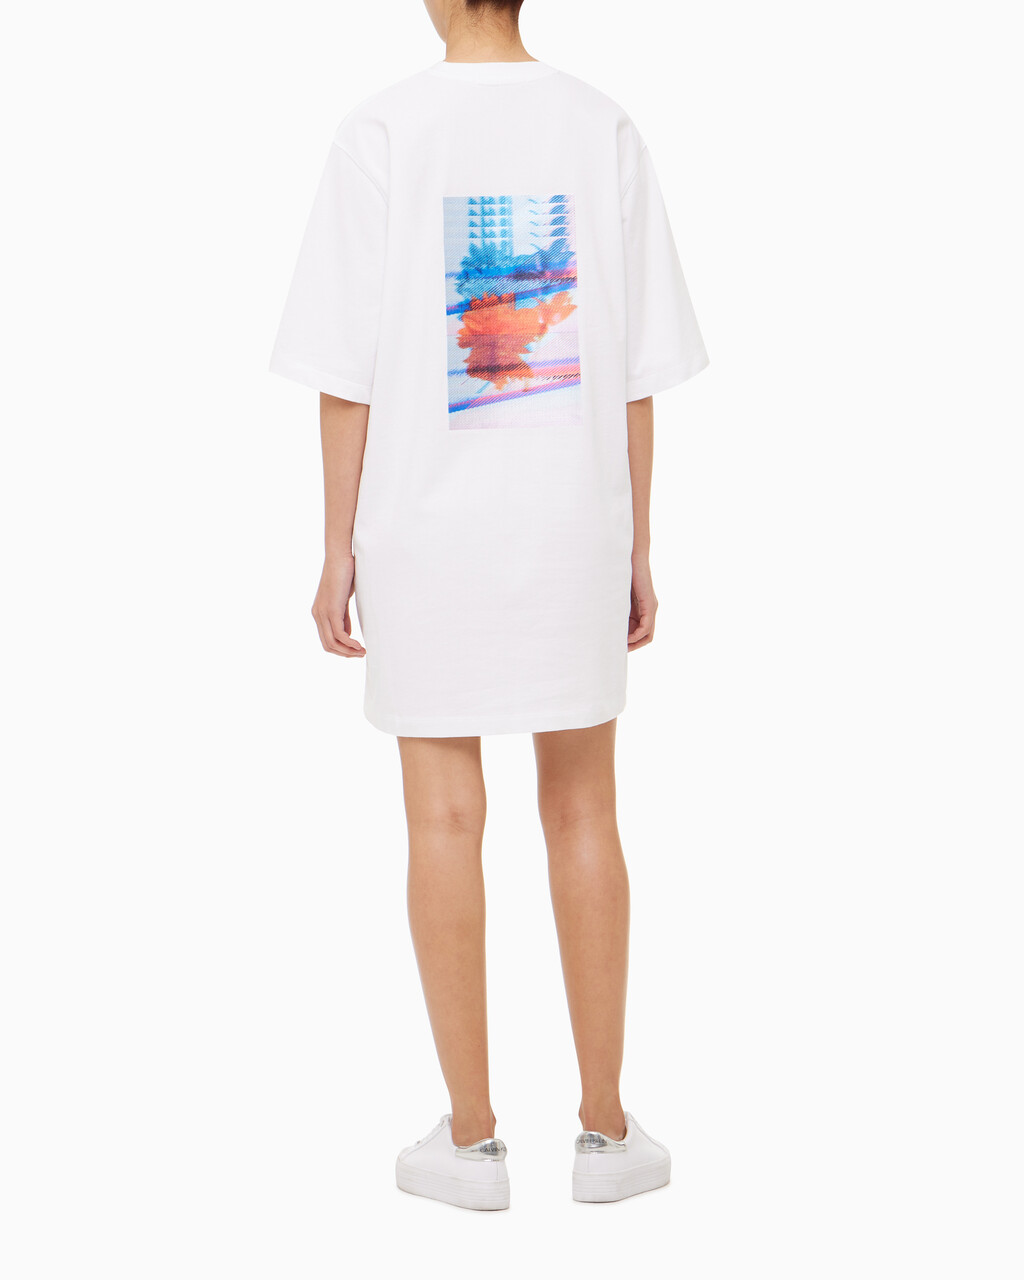 Buy 여성 모션 프로럴 티셔츠 원피스 in color BRIGHT WHITE